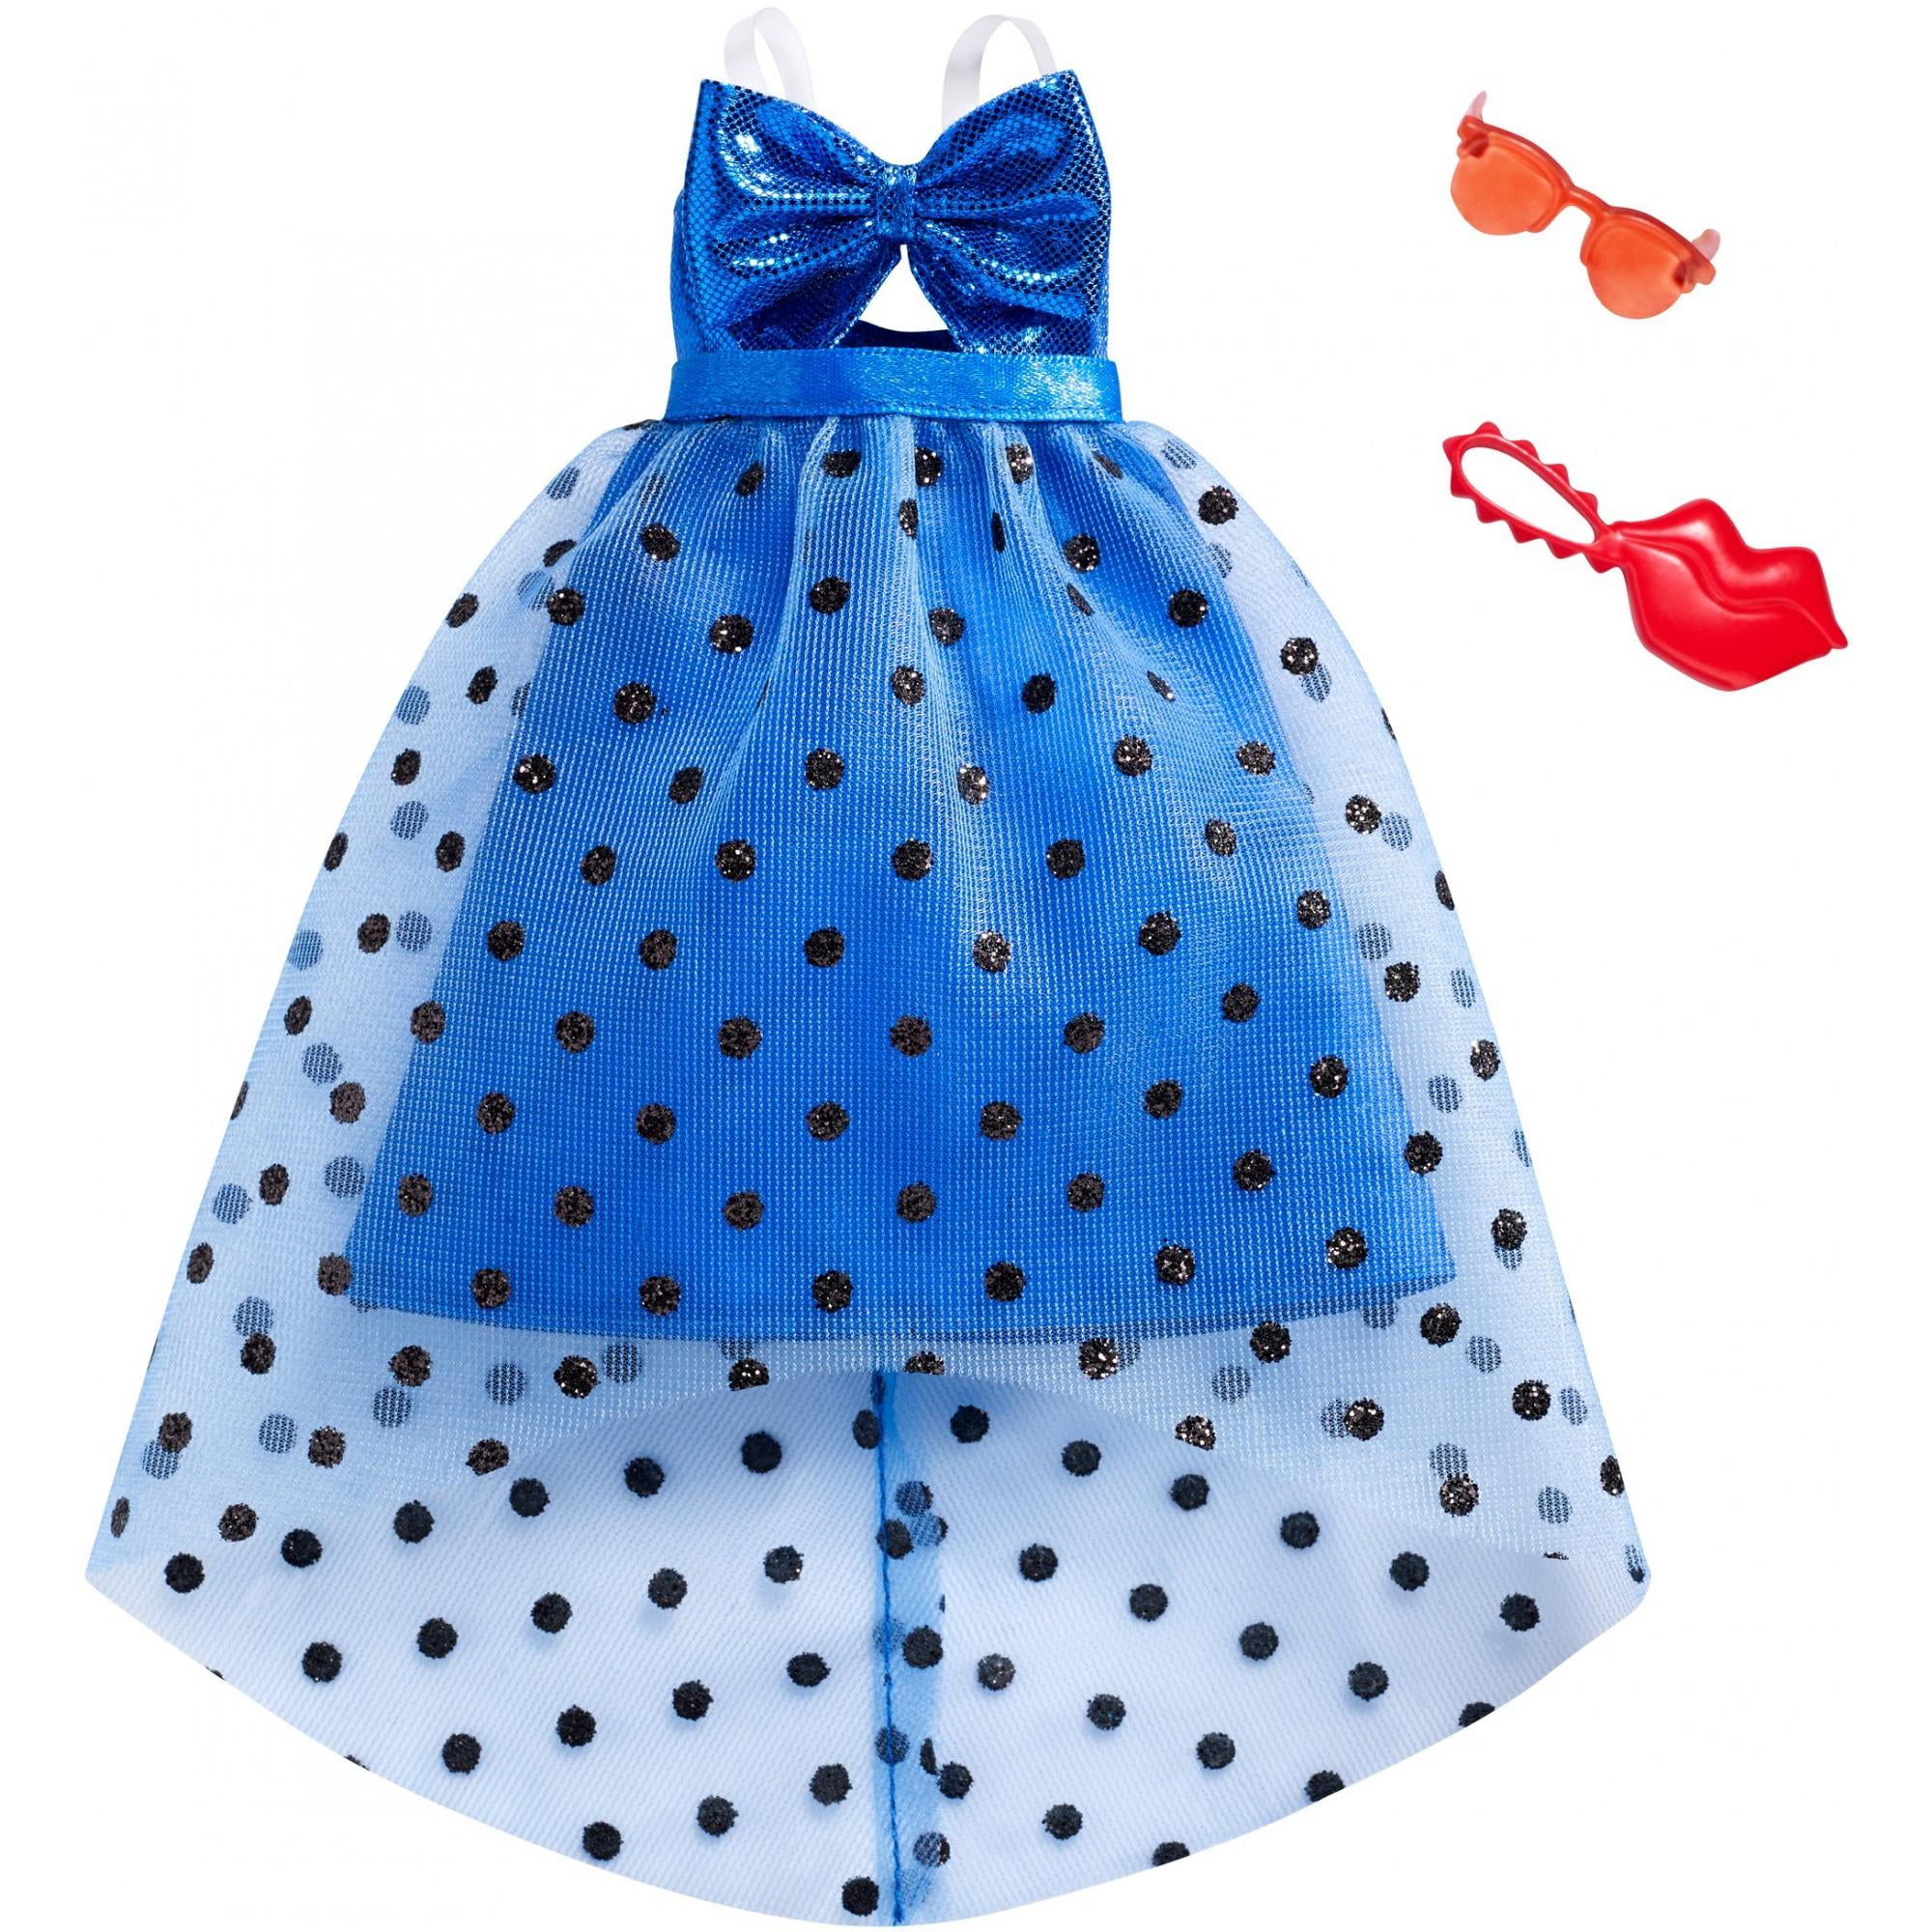 Barbie Complete Looks Blue Bow Party Dress Fashion Pack - Walmart.com